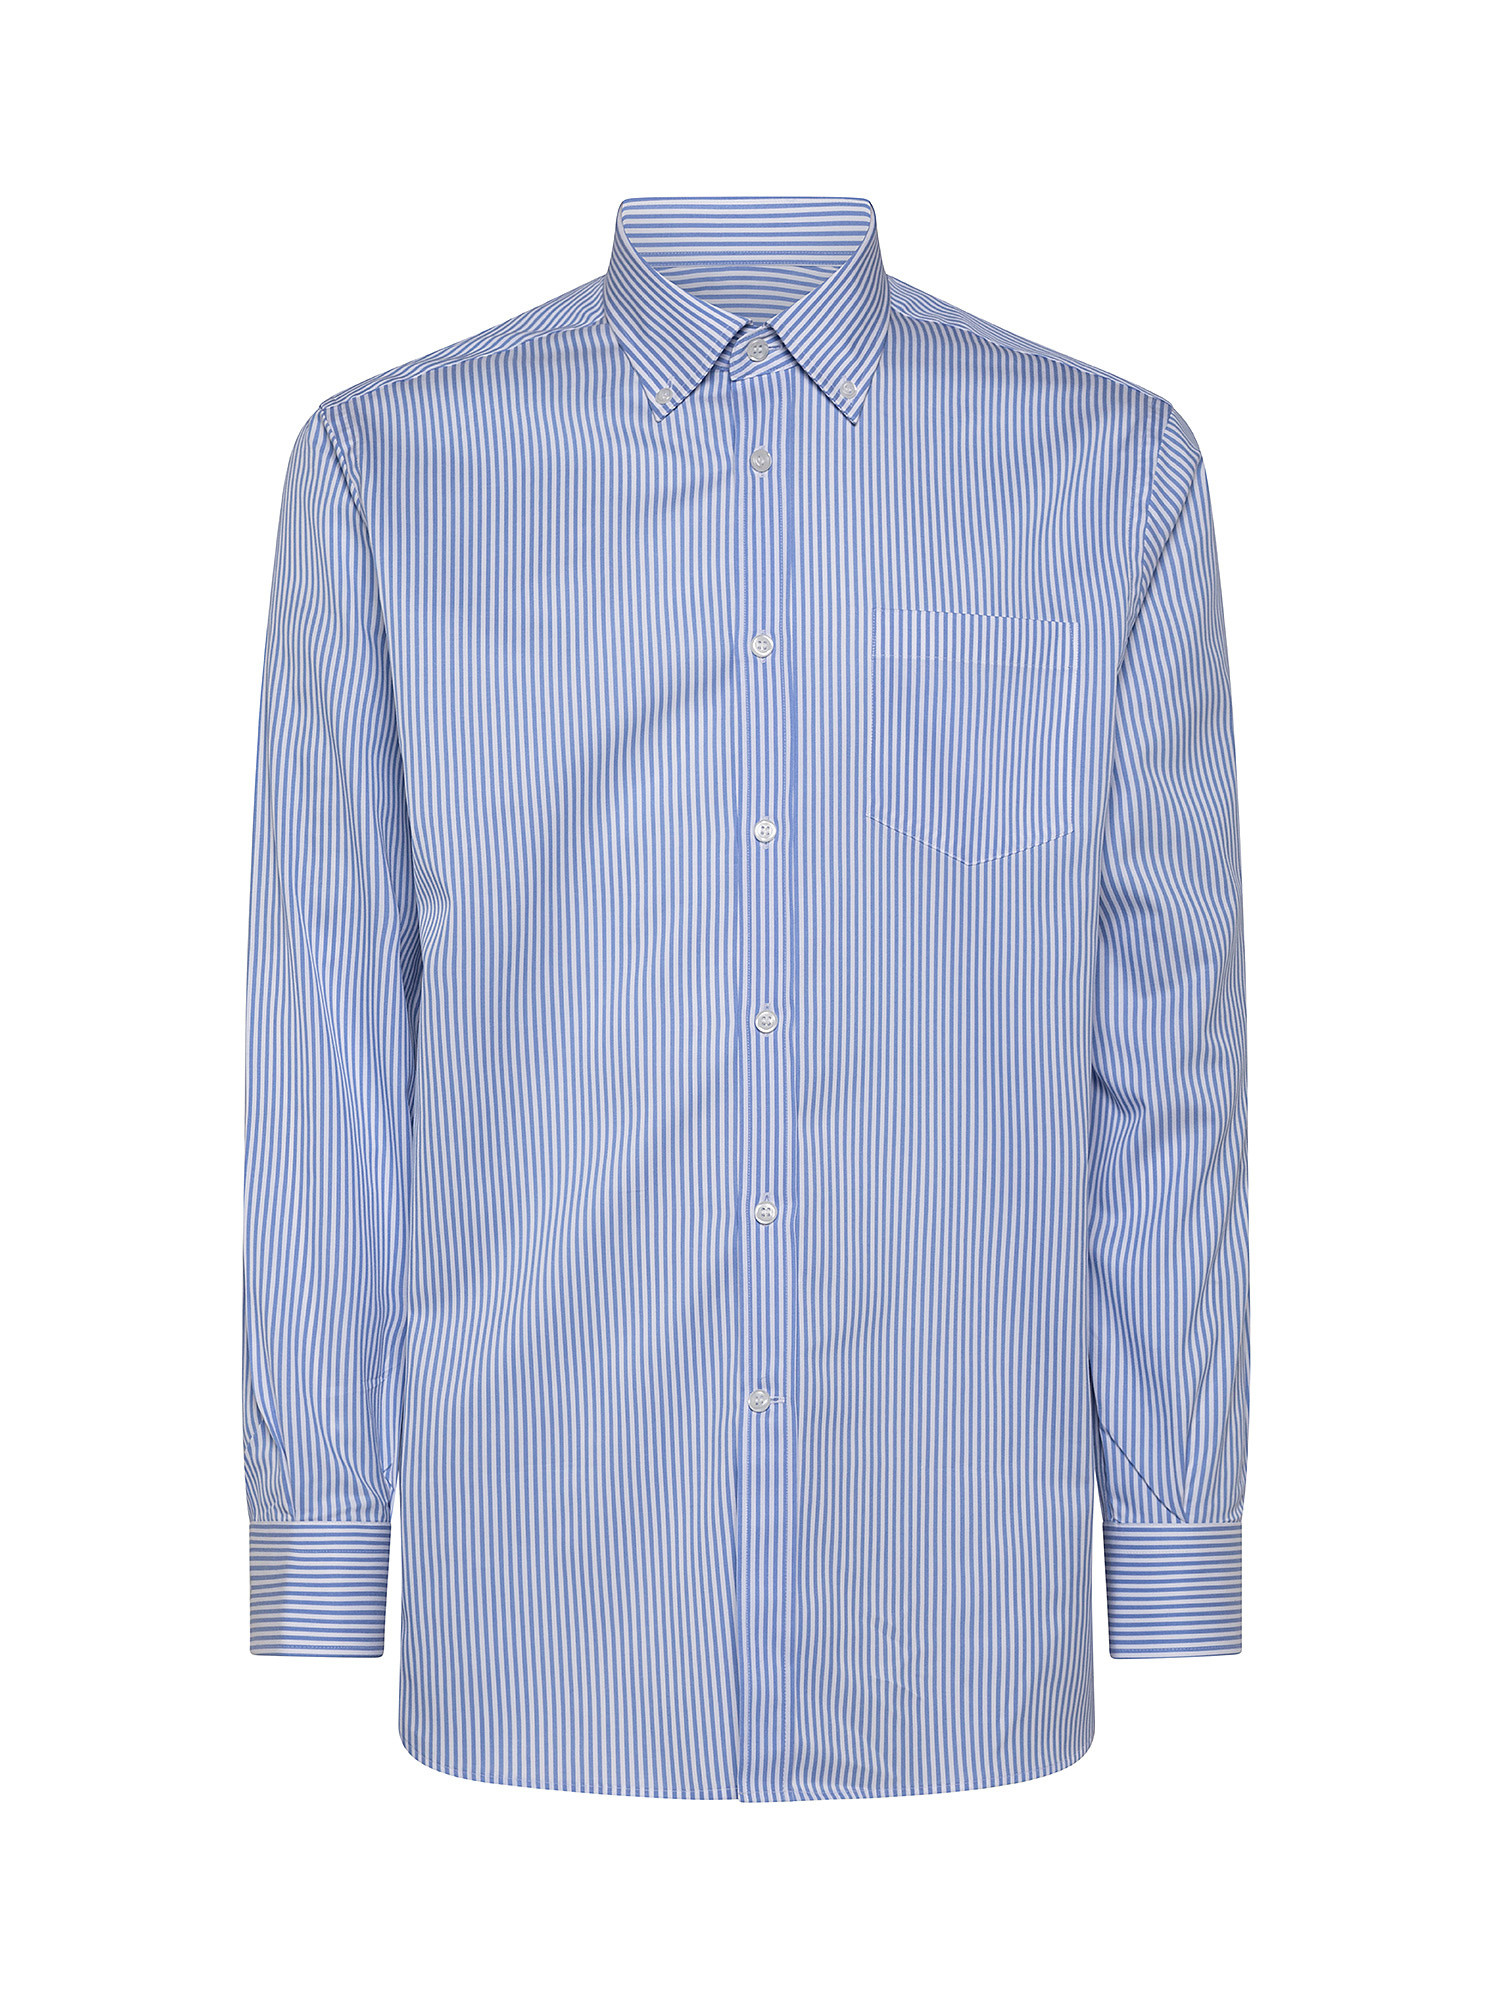 Camicia regular fit cotone popeline, Azzurro, large image number 0